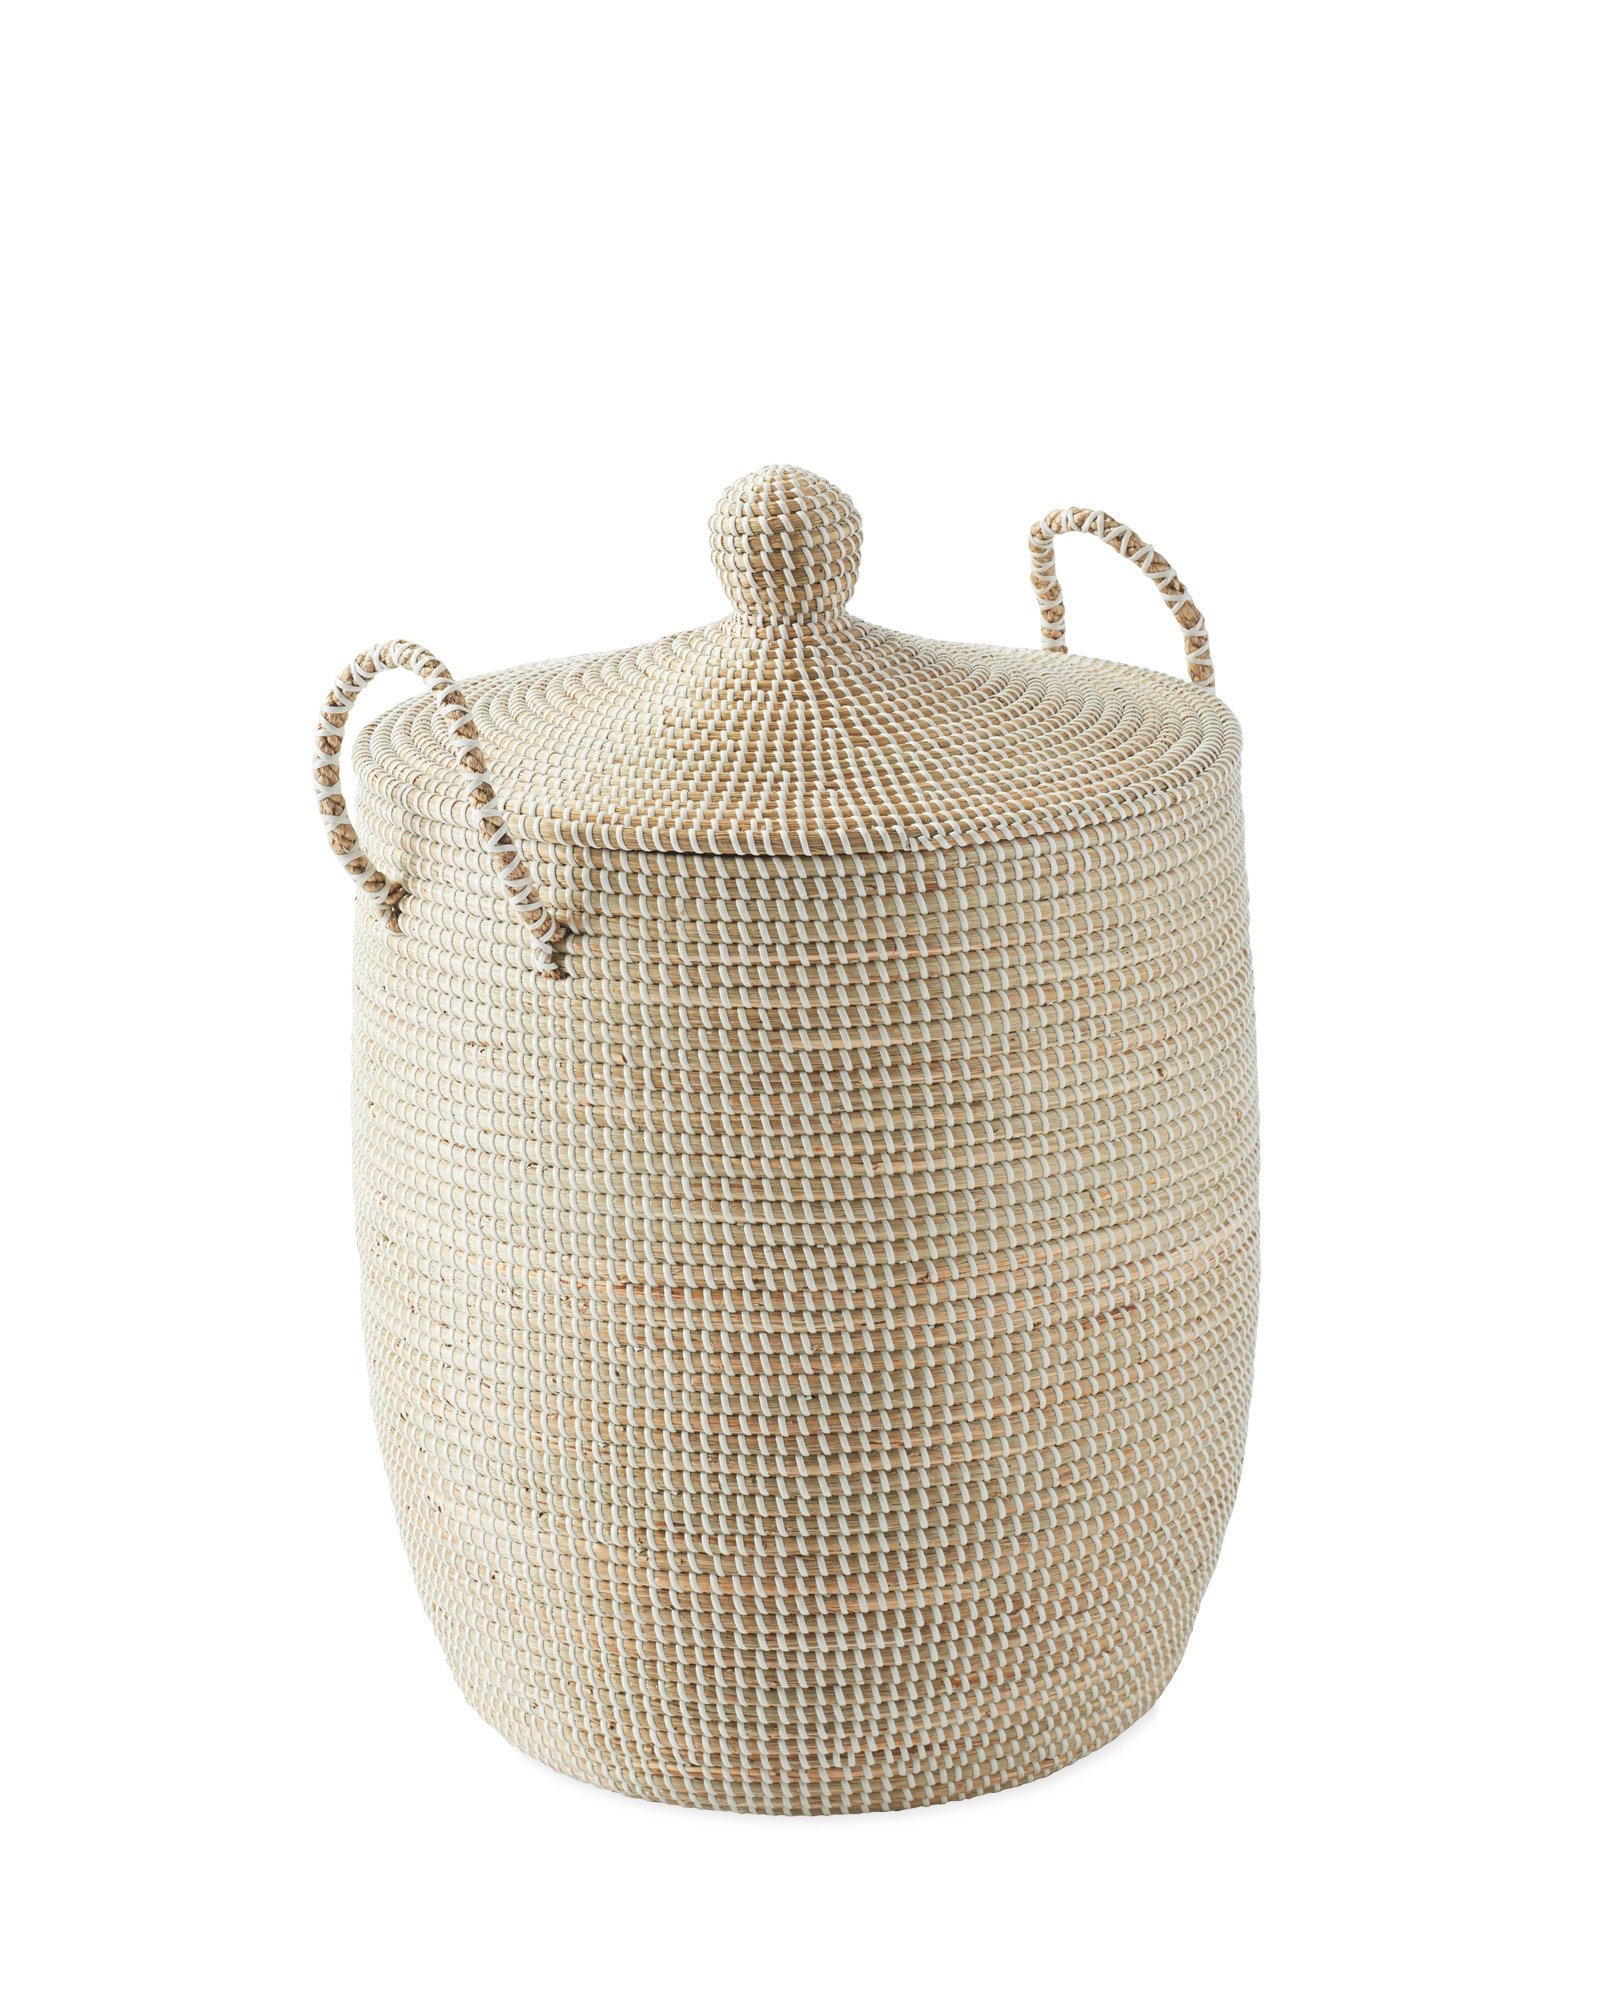 Solid La Jolla Medium Basket - White - Image 0